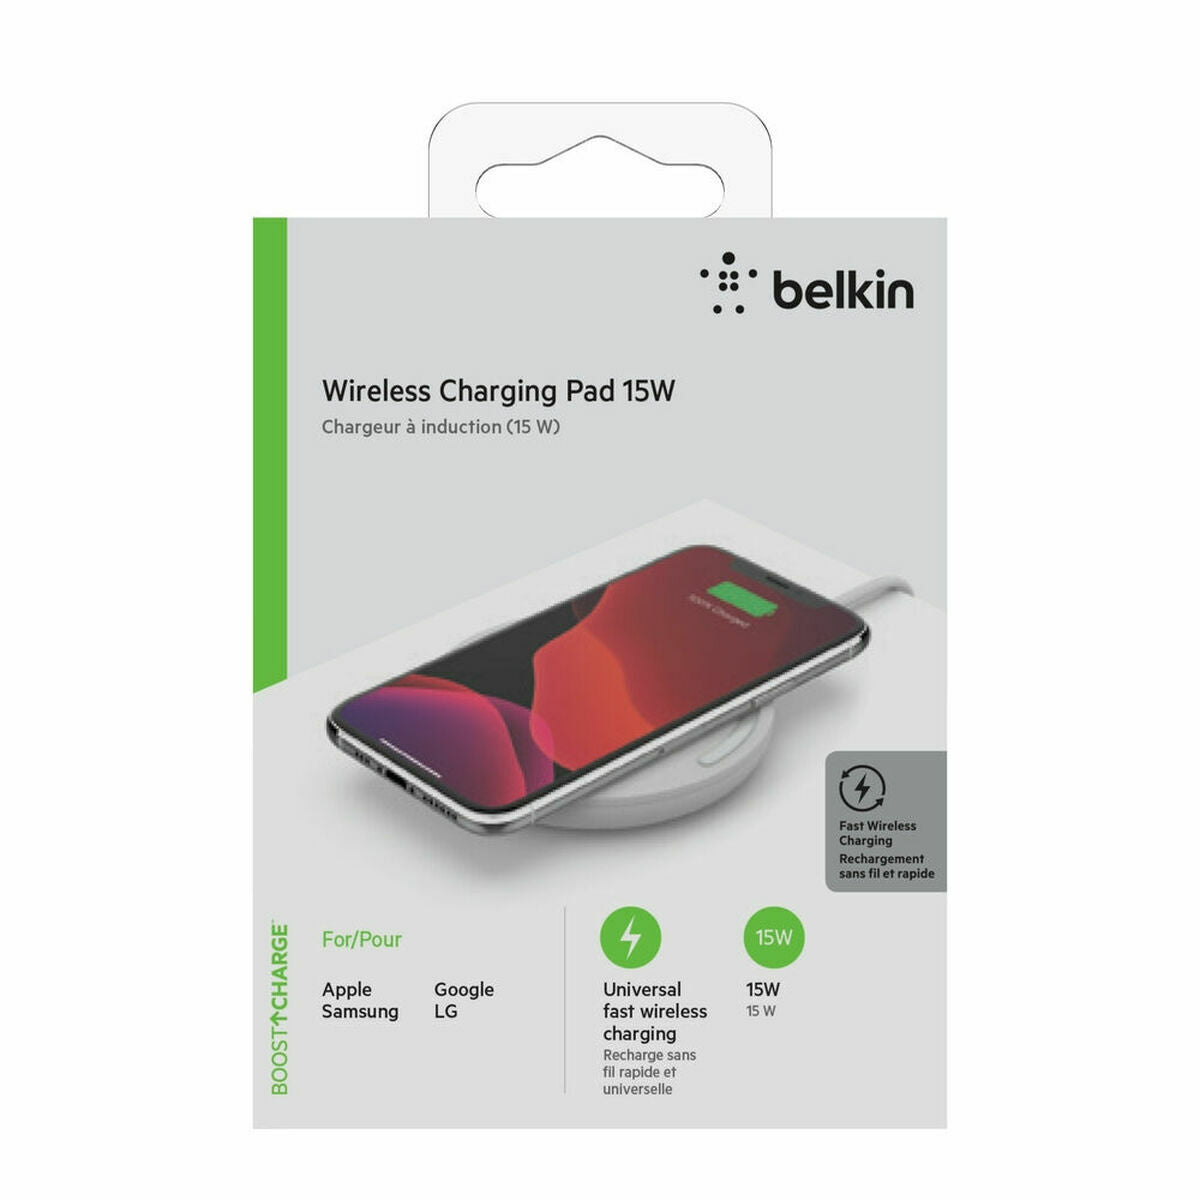 Chargeur sans fil avec support pour mobiles Belkin WIA002VFWH 15W